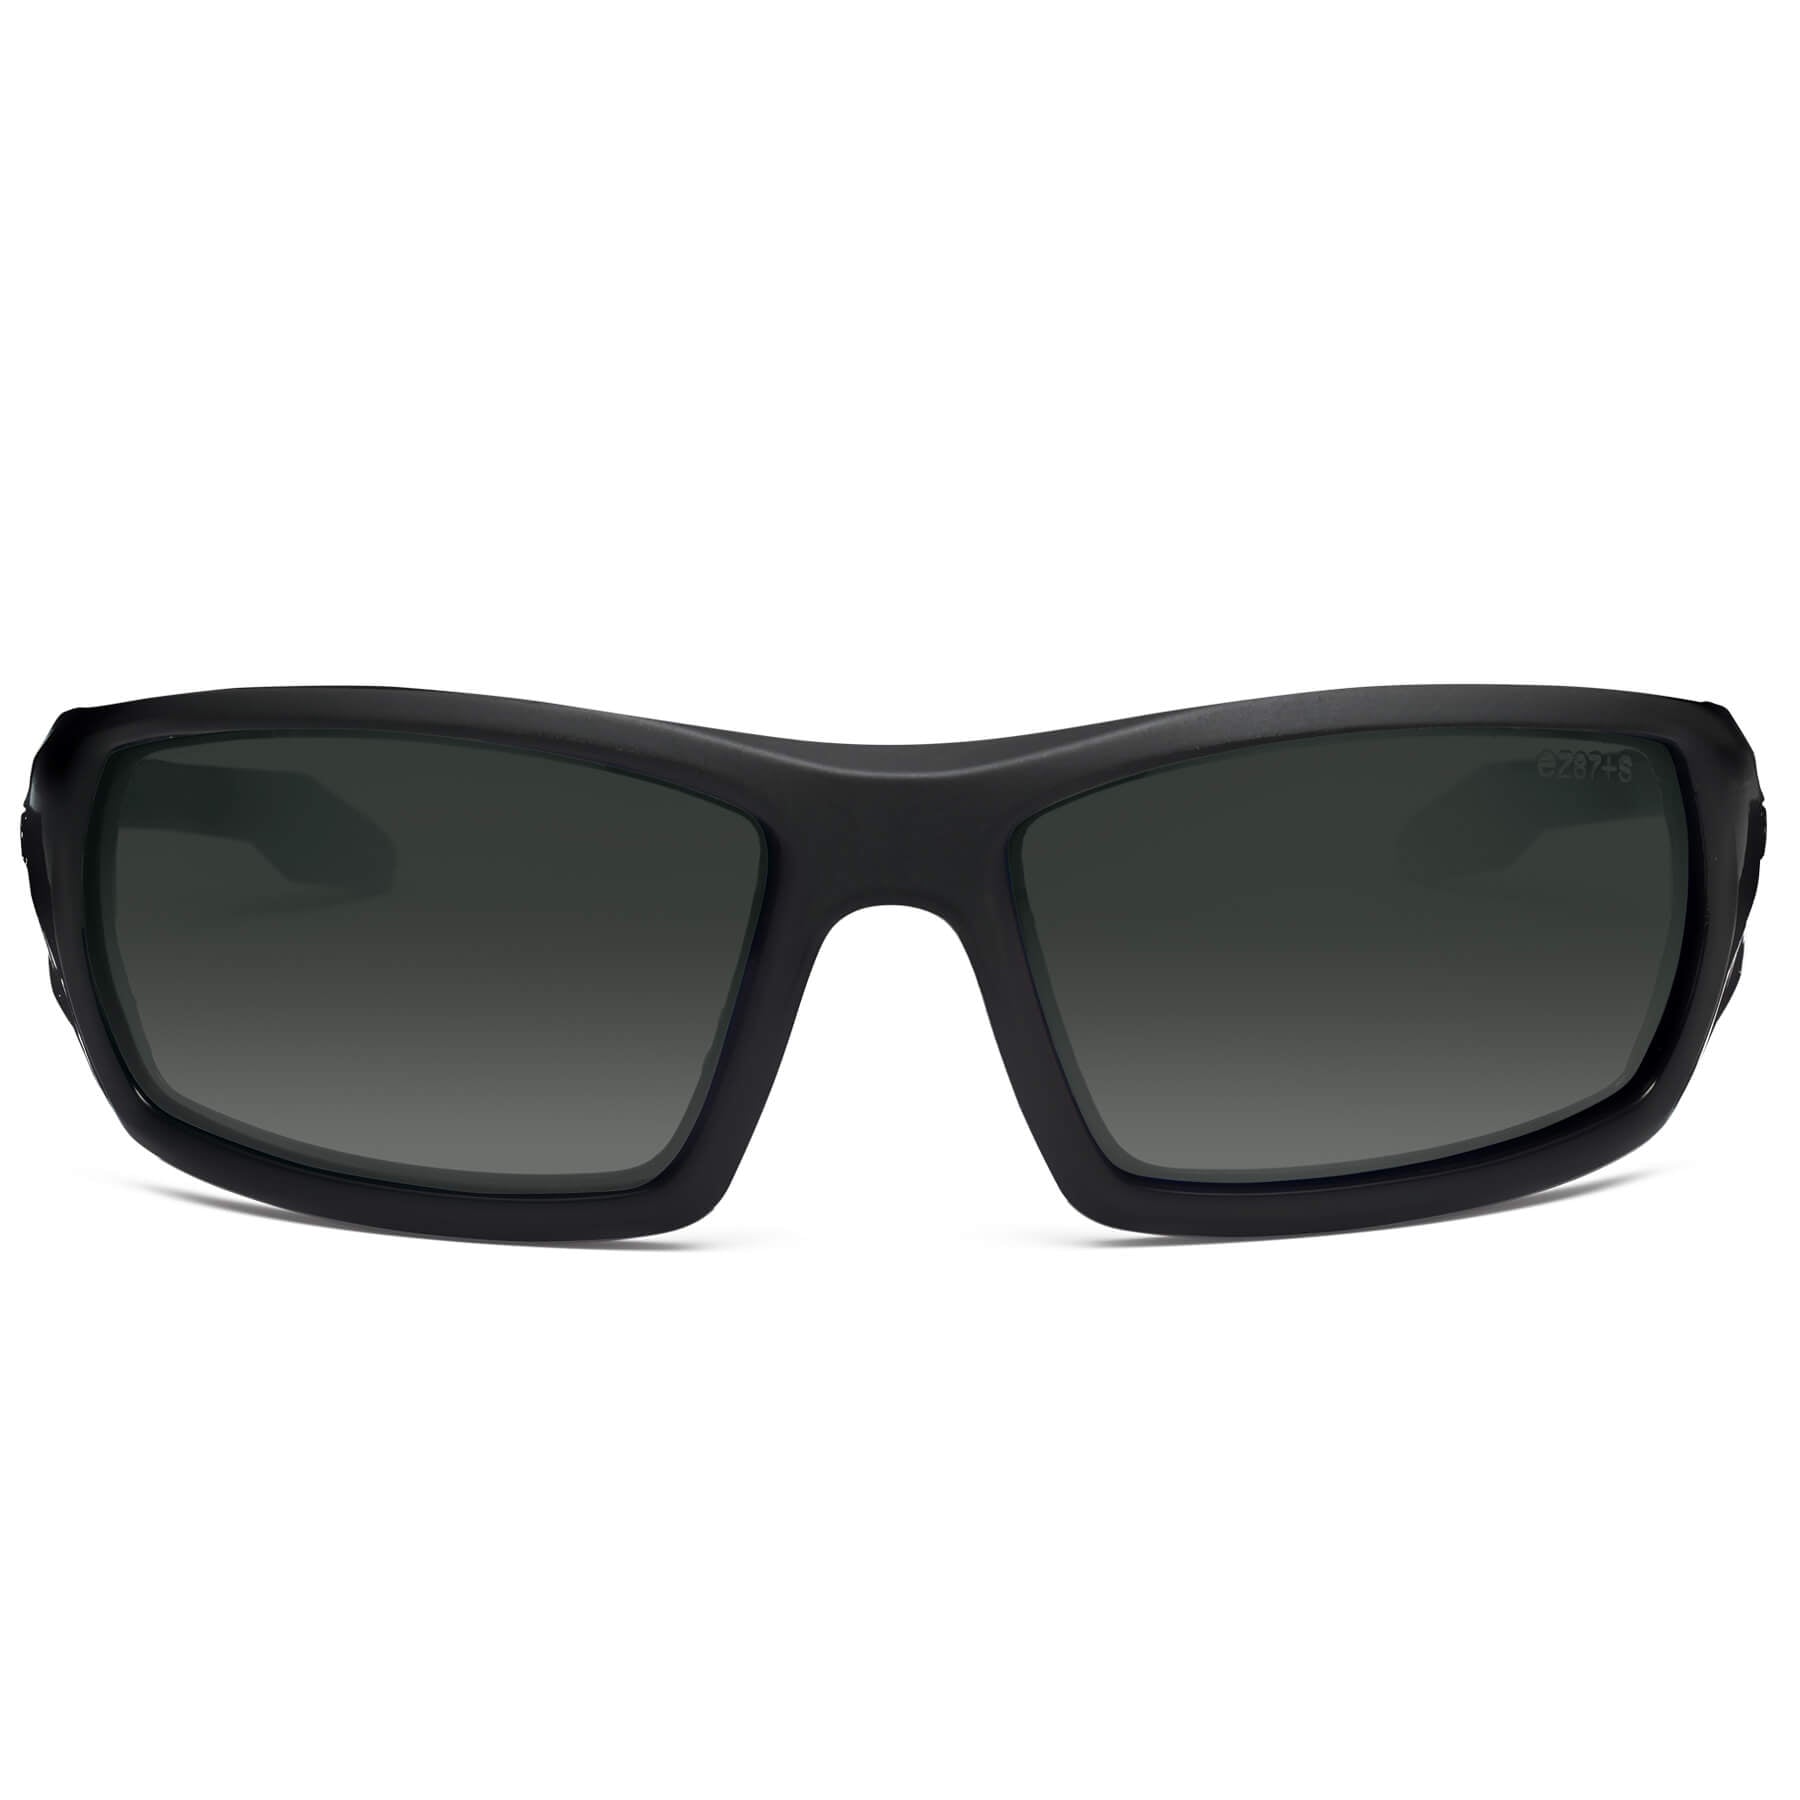 Skullerz® Odin Safety Sunglasses with Fog-Off